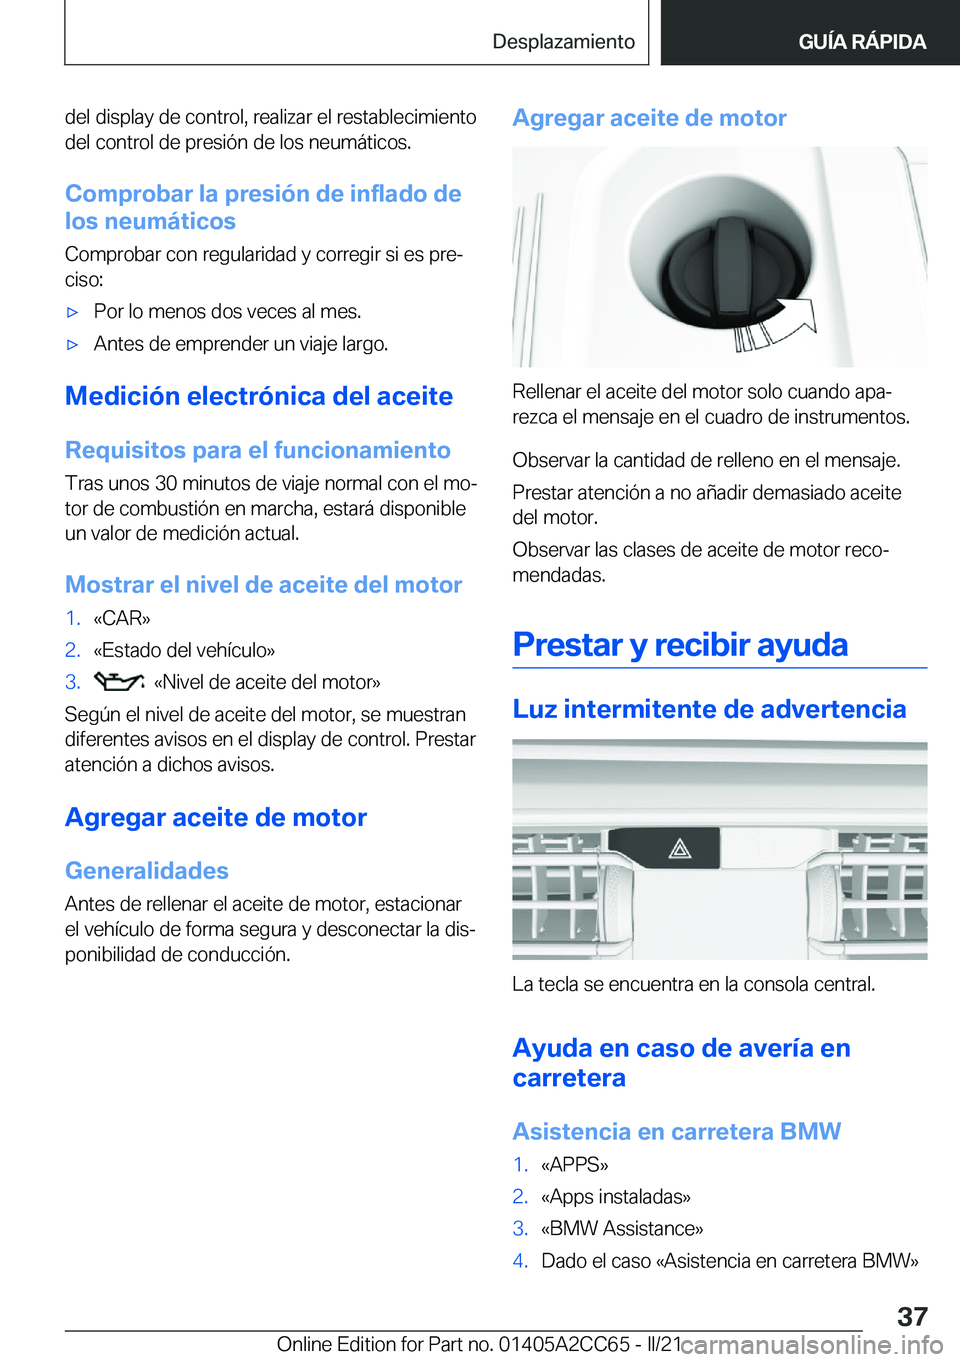 BMW 8 SERIES GRAN COUPE 2022  Manuales de Empleo (in Spanish) �d�e�l��d�i�s�p�l�a�y��d�e��c�o�n�t�r�o�l�,��r�e�a�l�i�z�a�r��e�l��r�e�s�t�a�b�l�e�c�i�m�i�e�n�t�o�d�e�l��c�o�n�t�r�o�l��d�e��p�r�e�s�i�